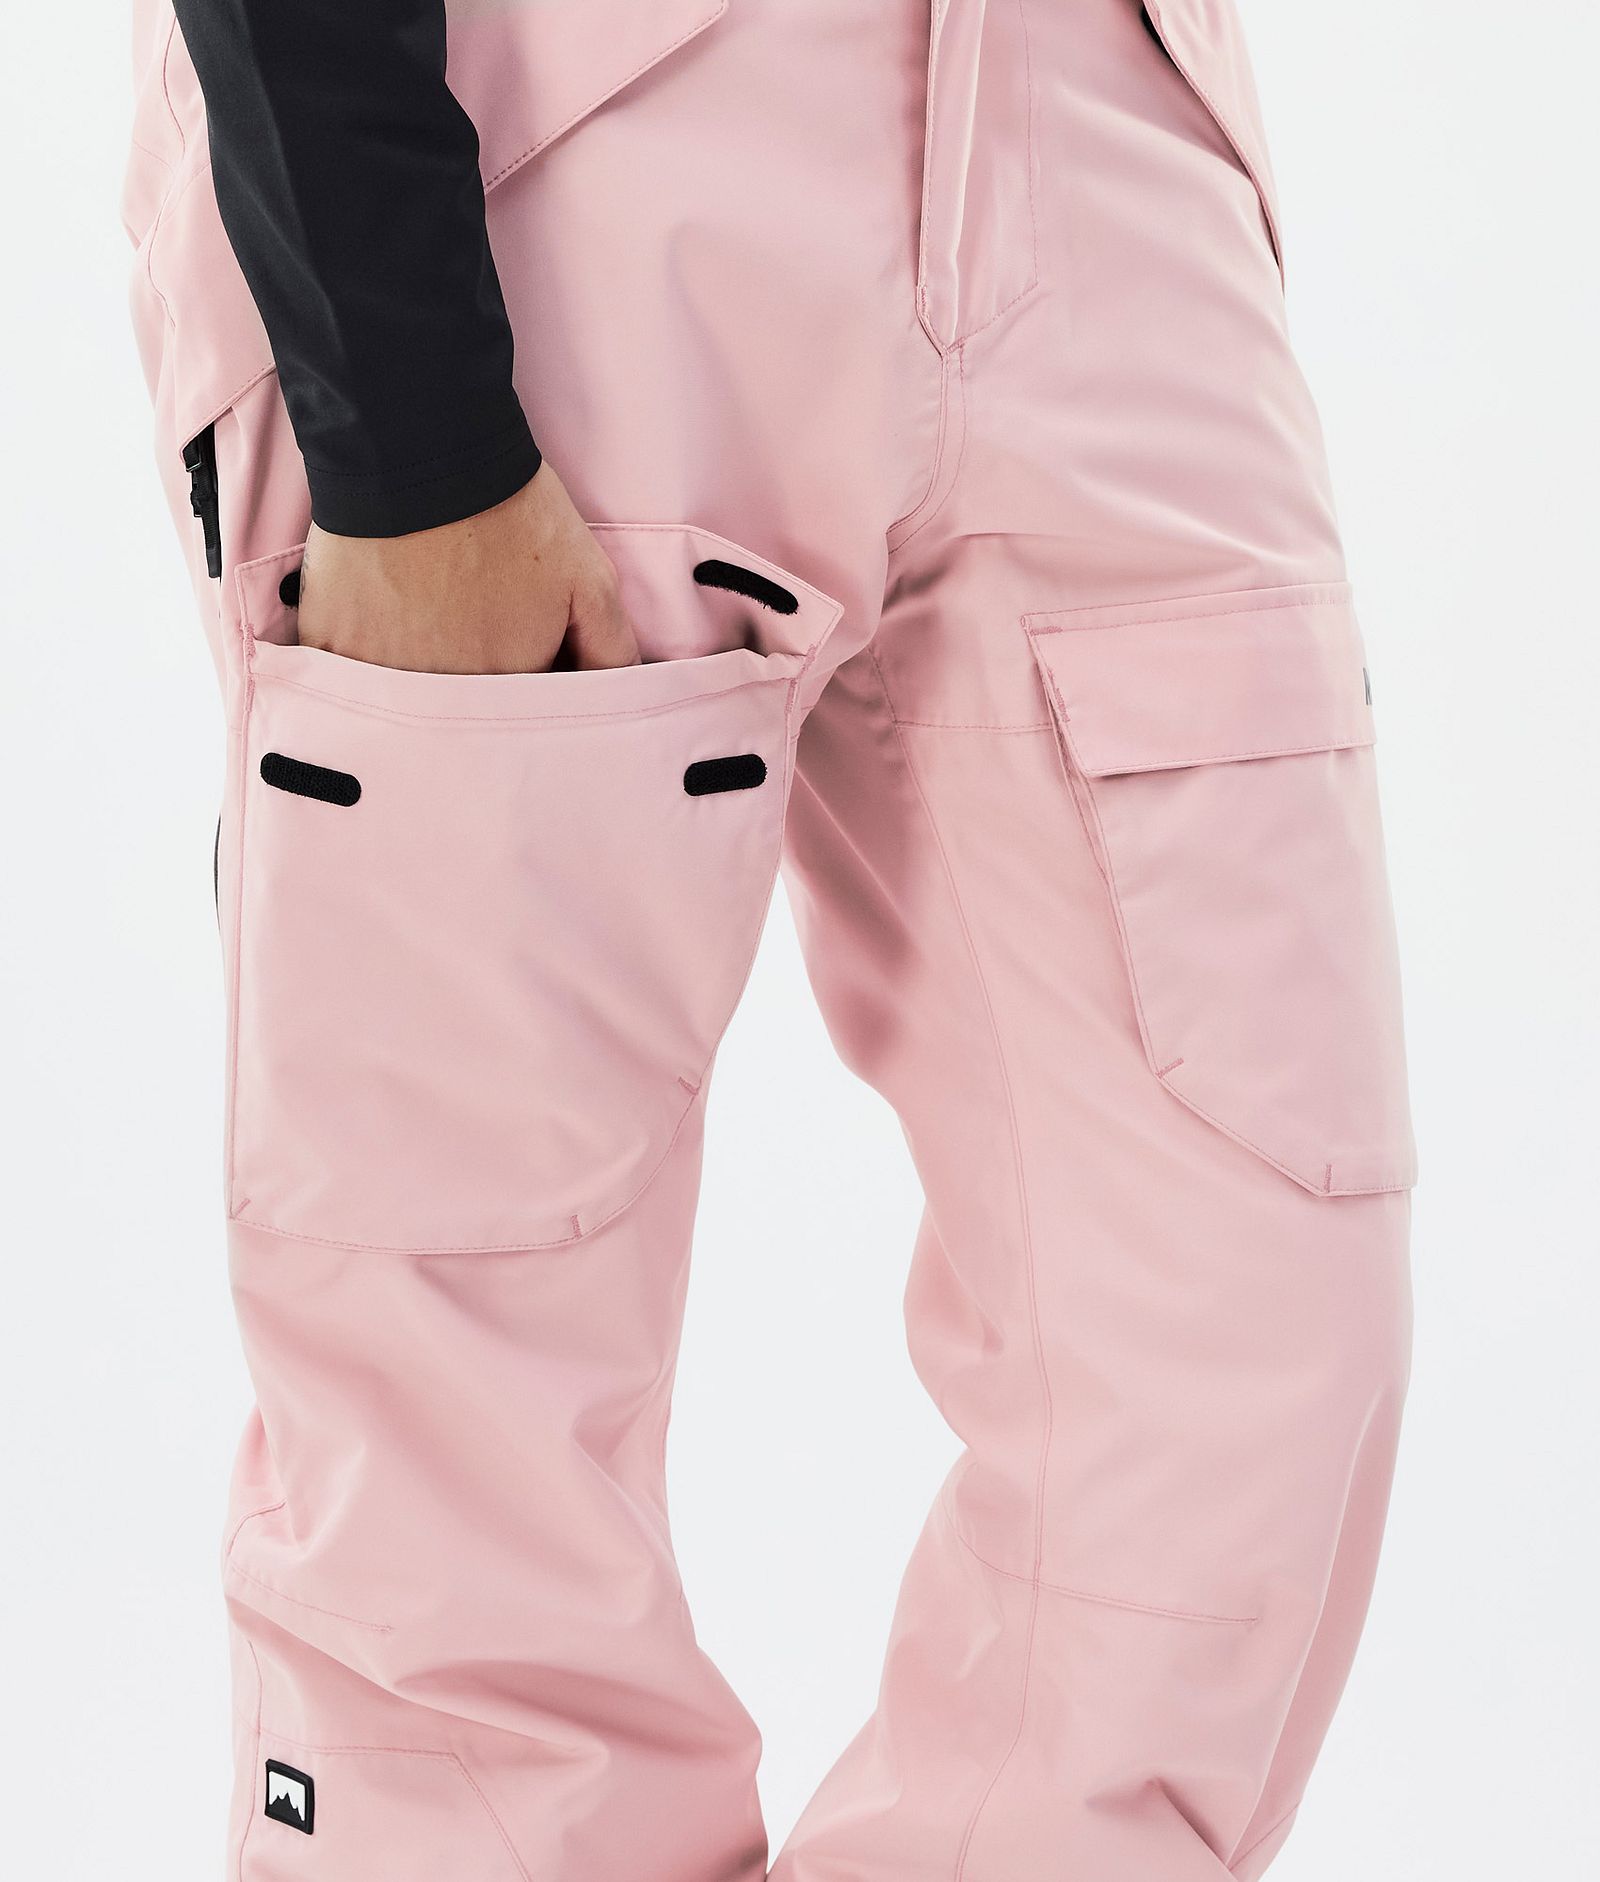 Montec Kirin W Pantaloni Sci Donna Soft Pink